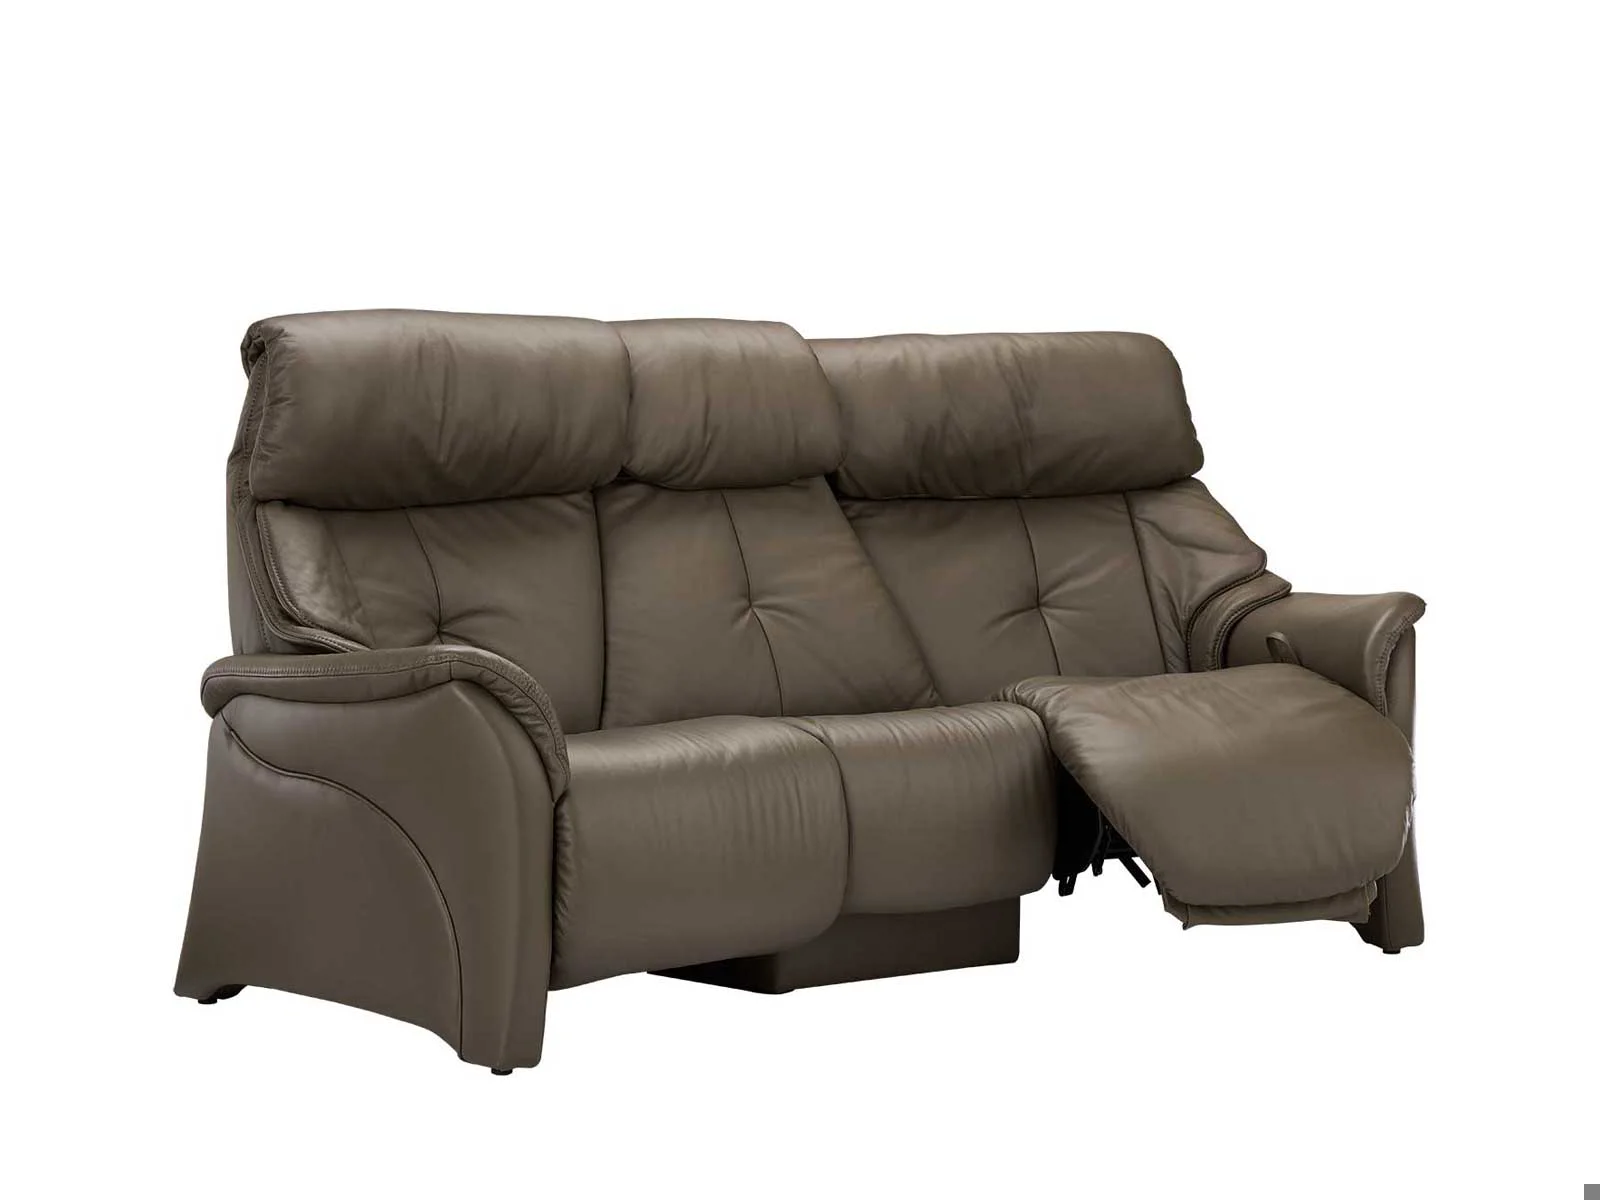 Trapezoidal Double Recliner Sofa